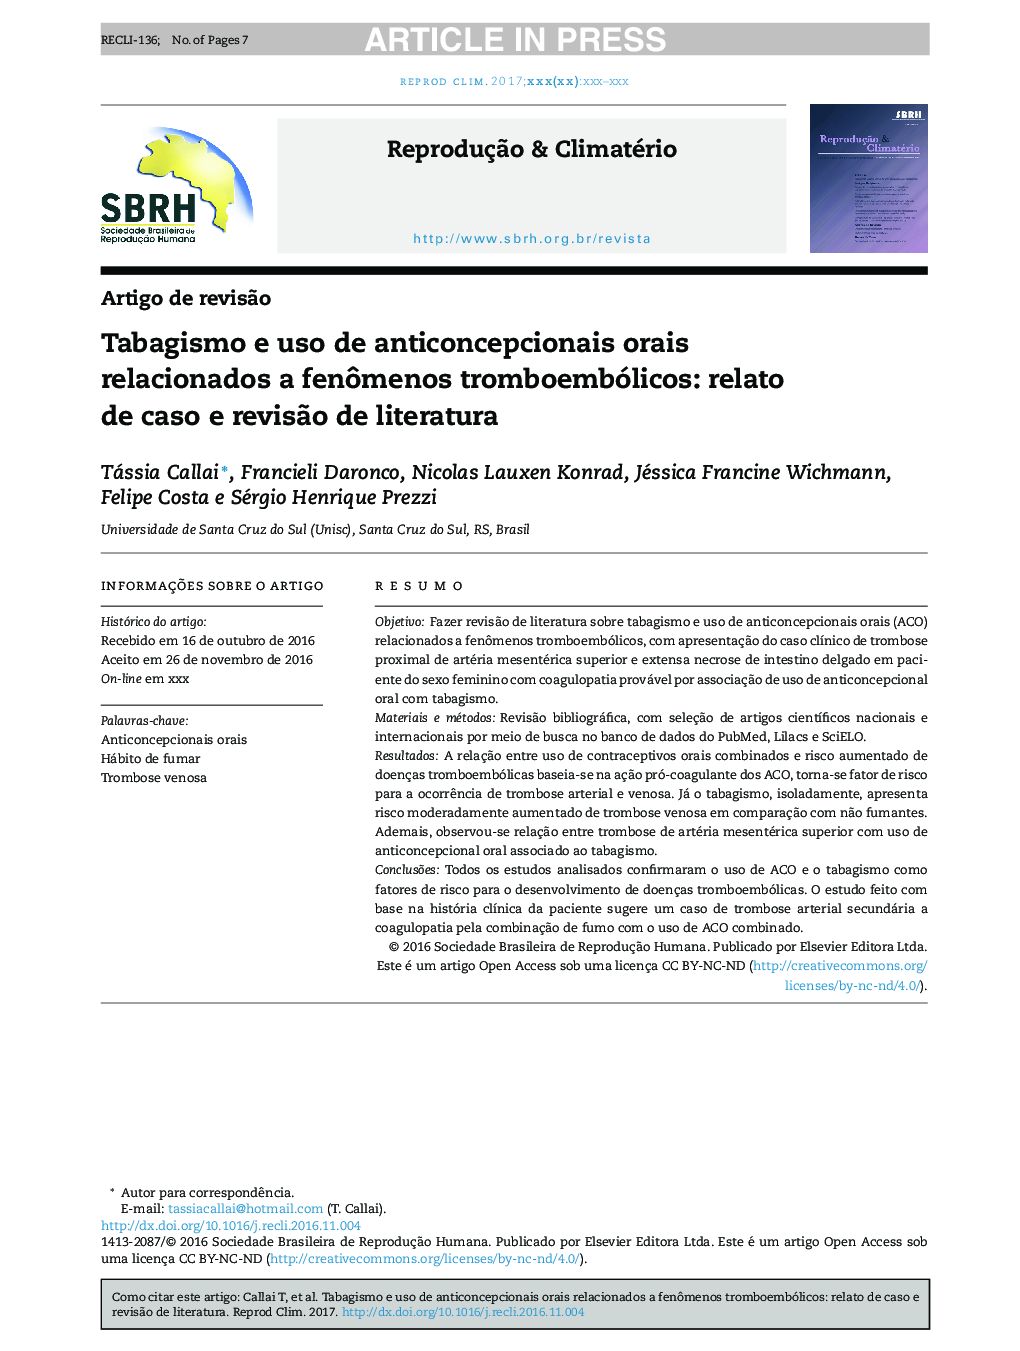 Tabagismo e uso de anticoncepcionais orais relacionados a fenÃ´menos tromboembólicos: relato de caso e revisÃ£o de literatura